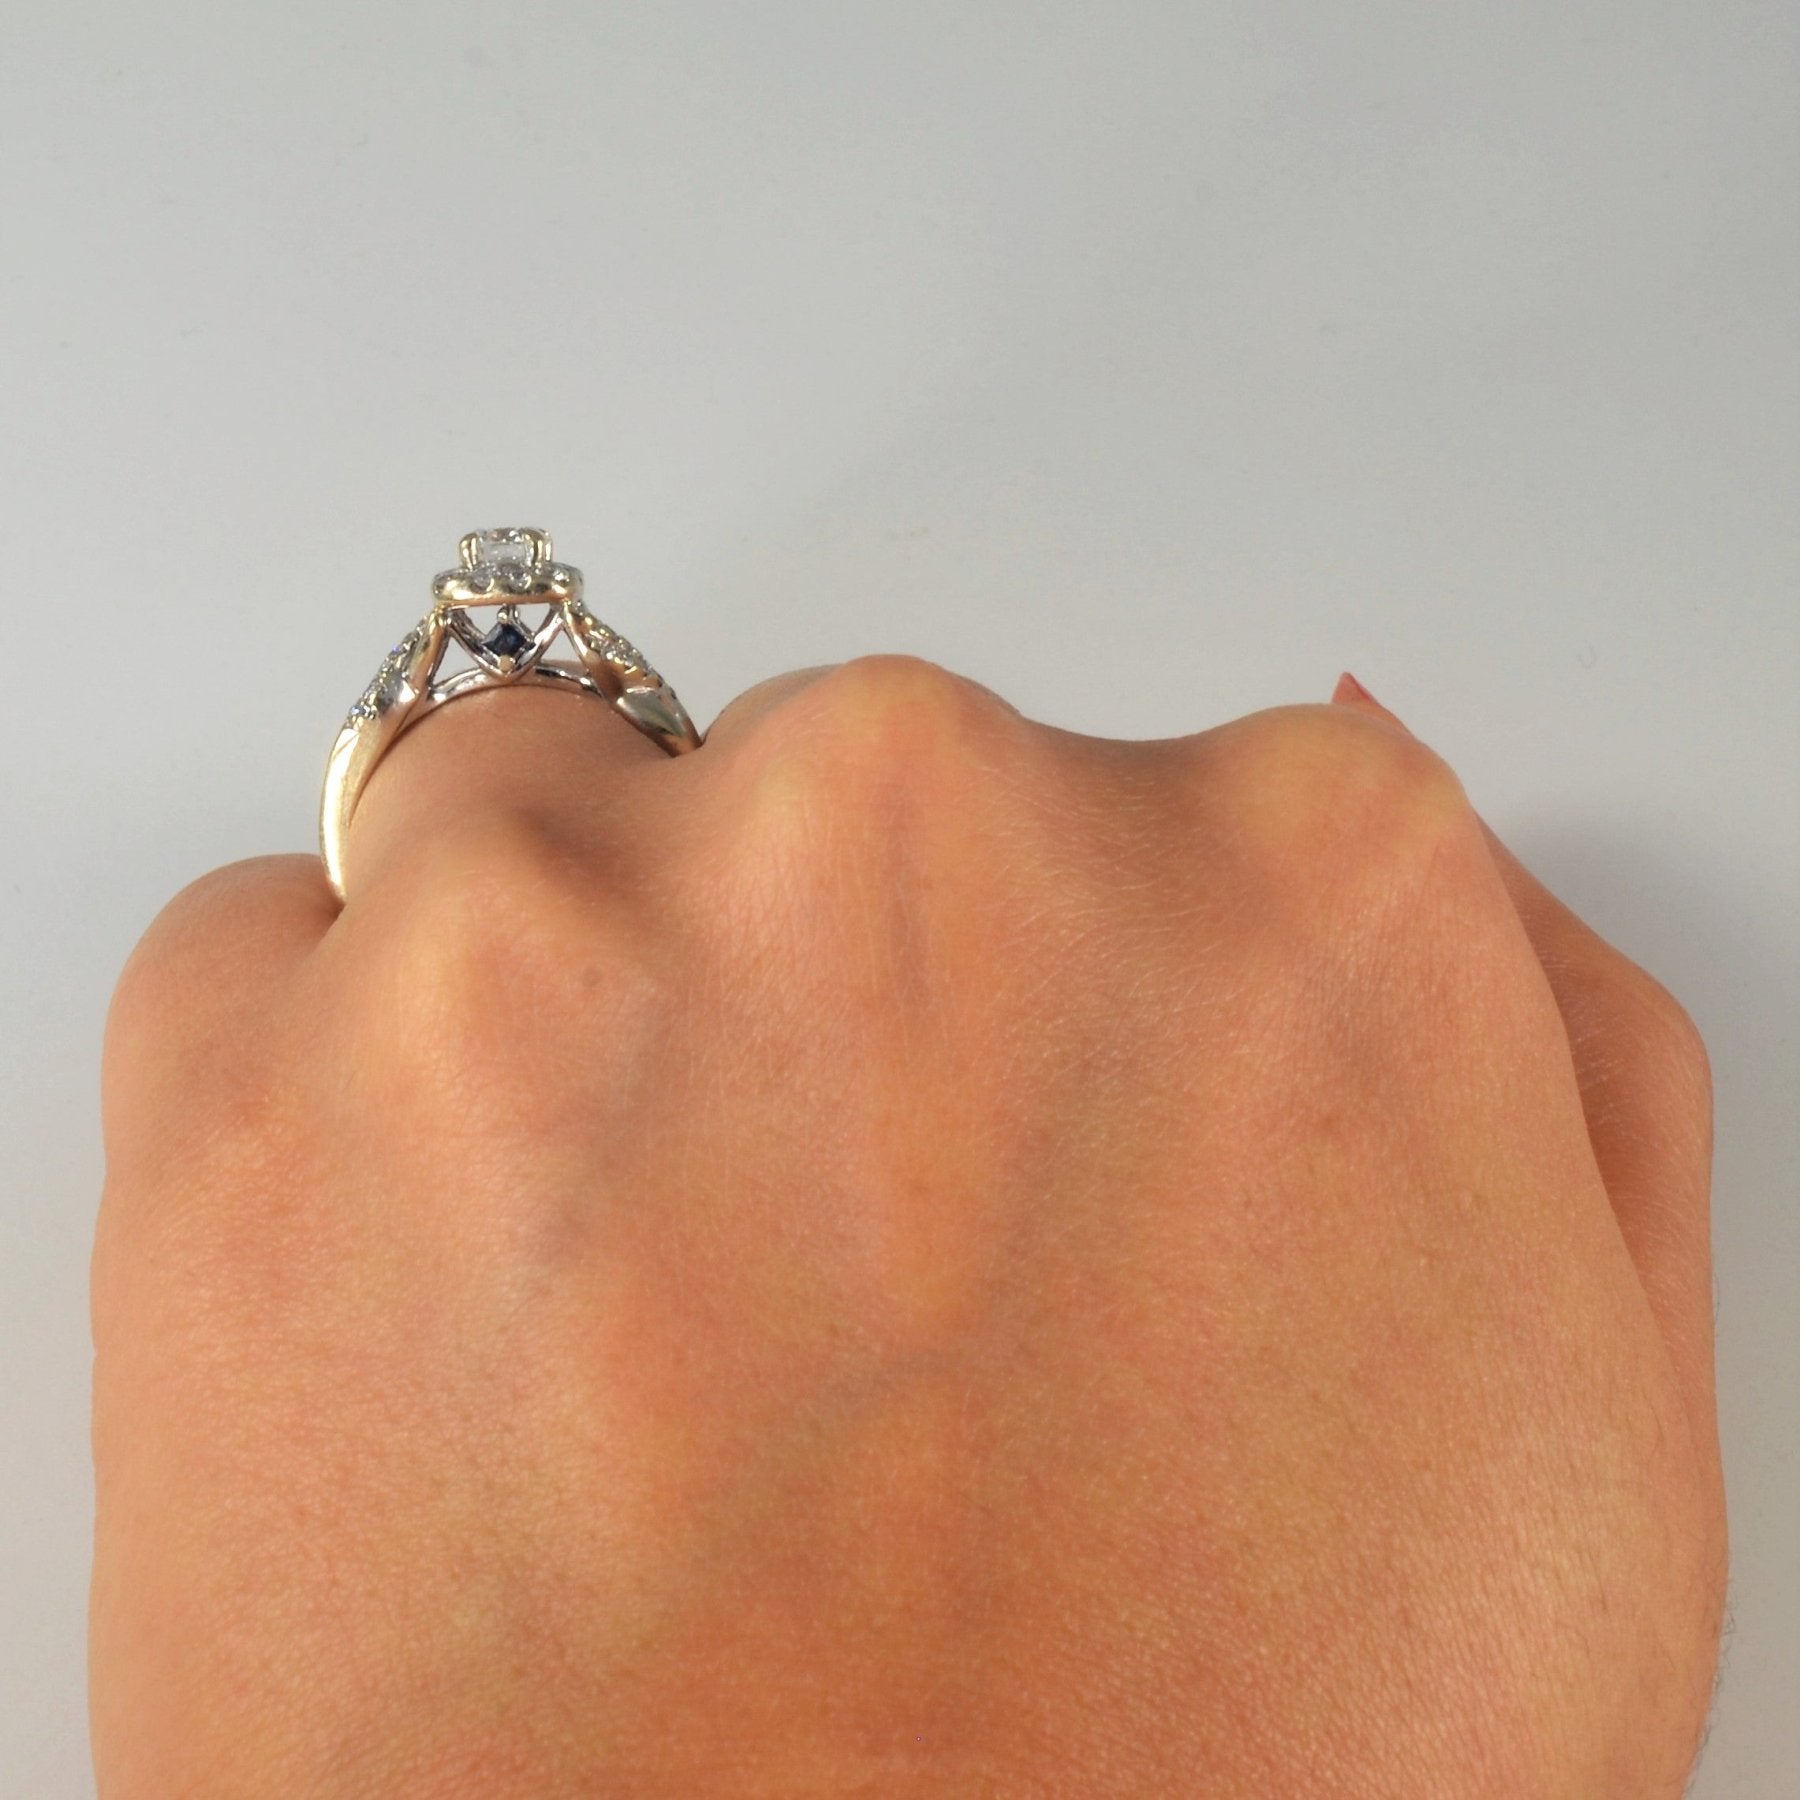 'Vera Wang' Halo Bypass Diamond Engagement Ring | 0.68ctw | SZ 5.5 | - 100 Ways